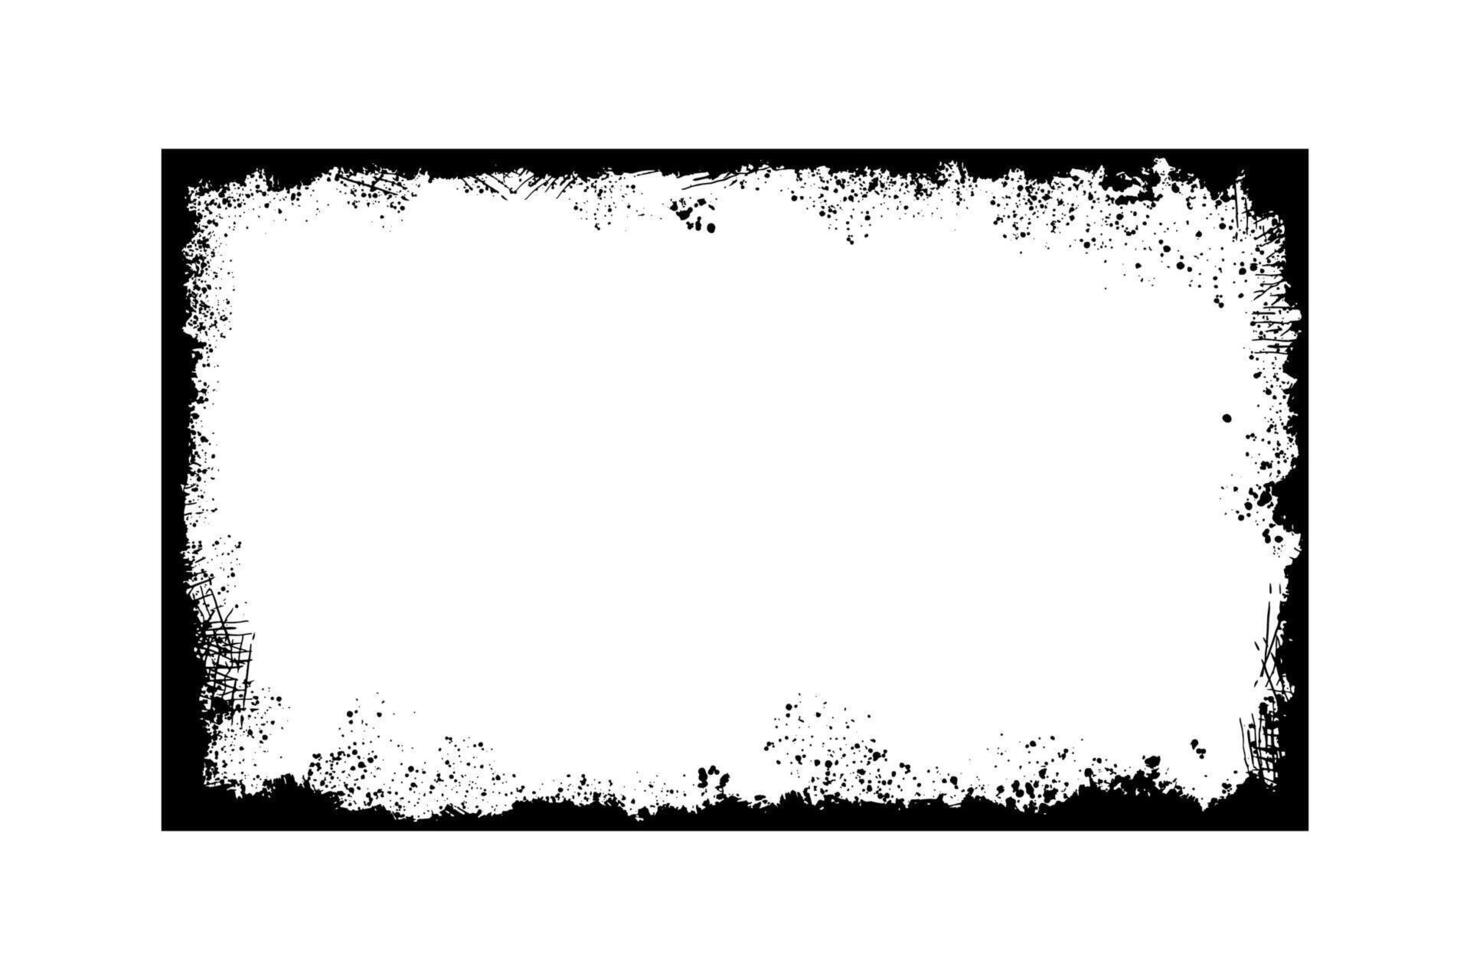 Grunge distressed frame. Ink empty black border. Vector illustration isolated on white background.